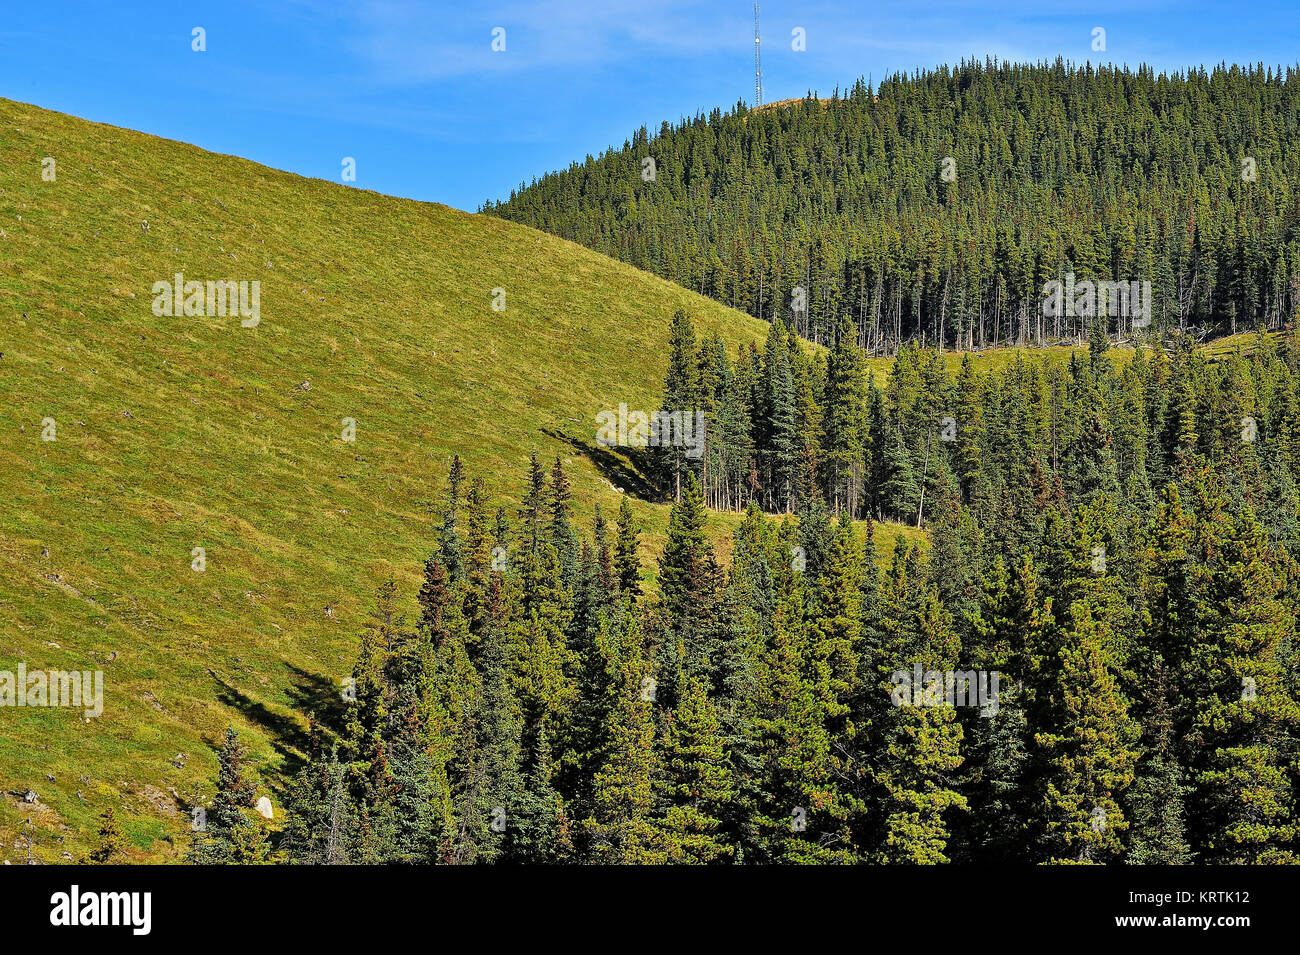 A mine reclaim area bordering on the untouched evergreen forest near Cadomin Alberta Canada. Stock Photo